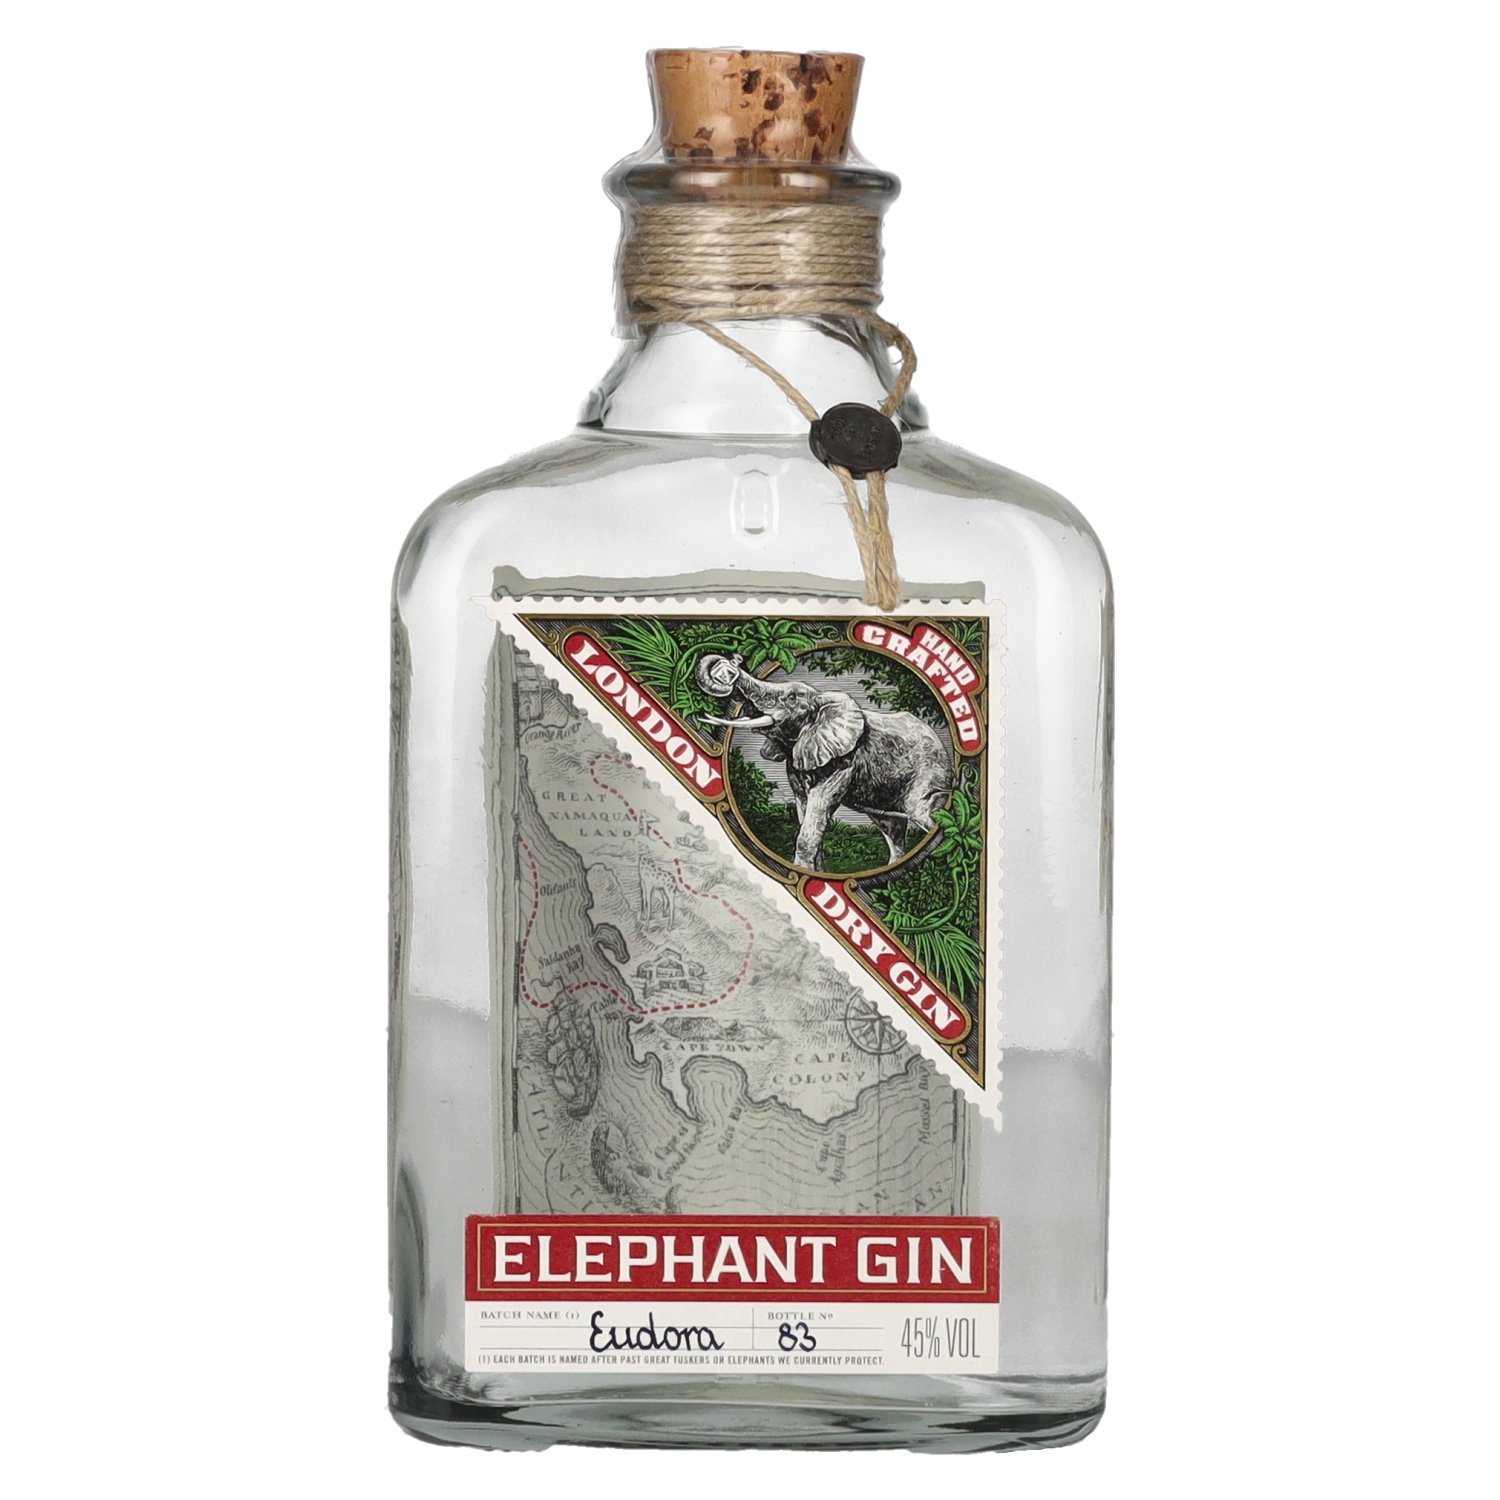 - Elephant Vol. delicando 0,5l London Gin 45% Dry